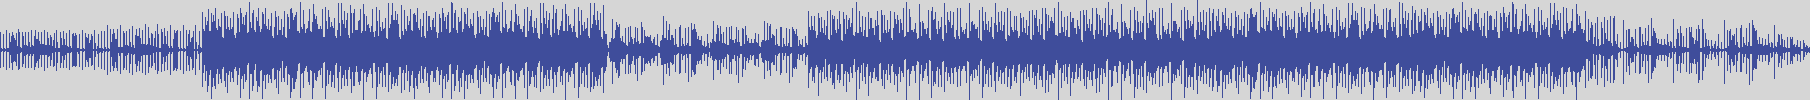 noclouds_chillout [NOC096] Matt Petteney - Bamboo Canes [Blue Flowers Mix] audio wave form